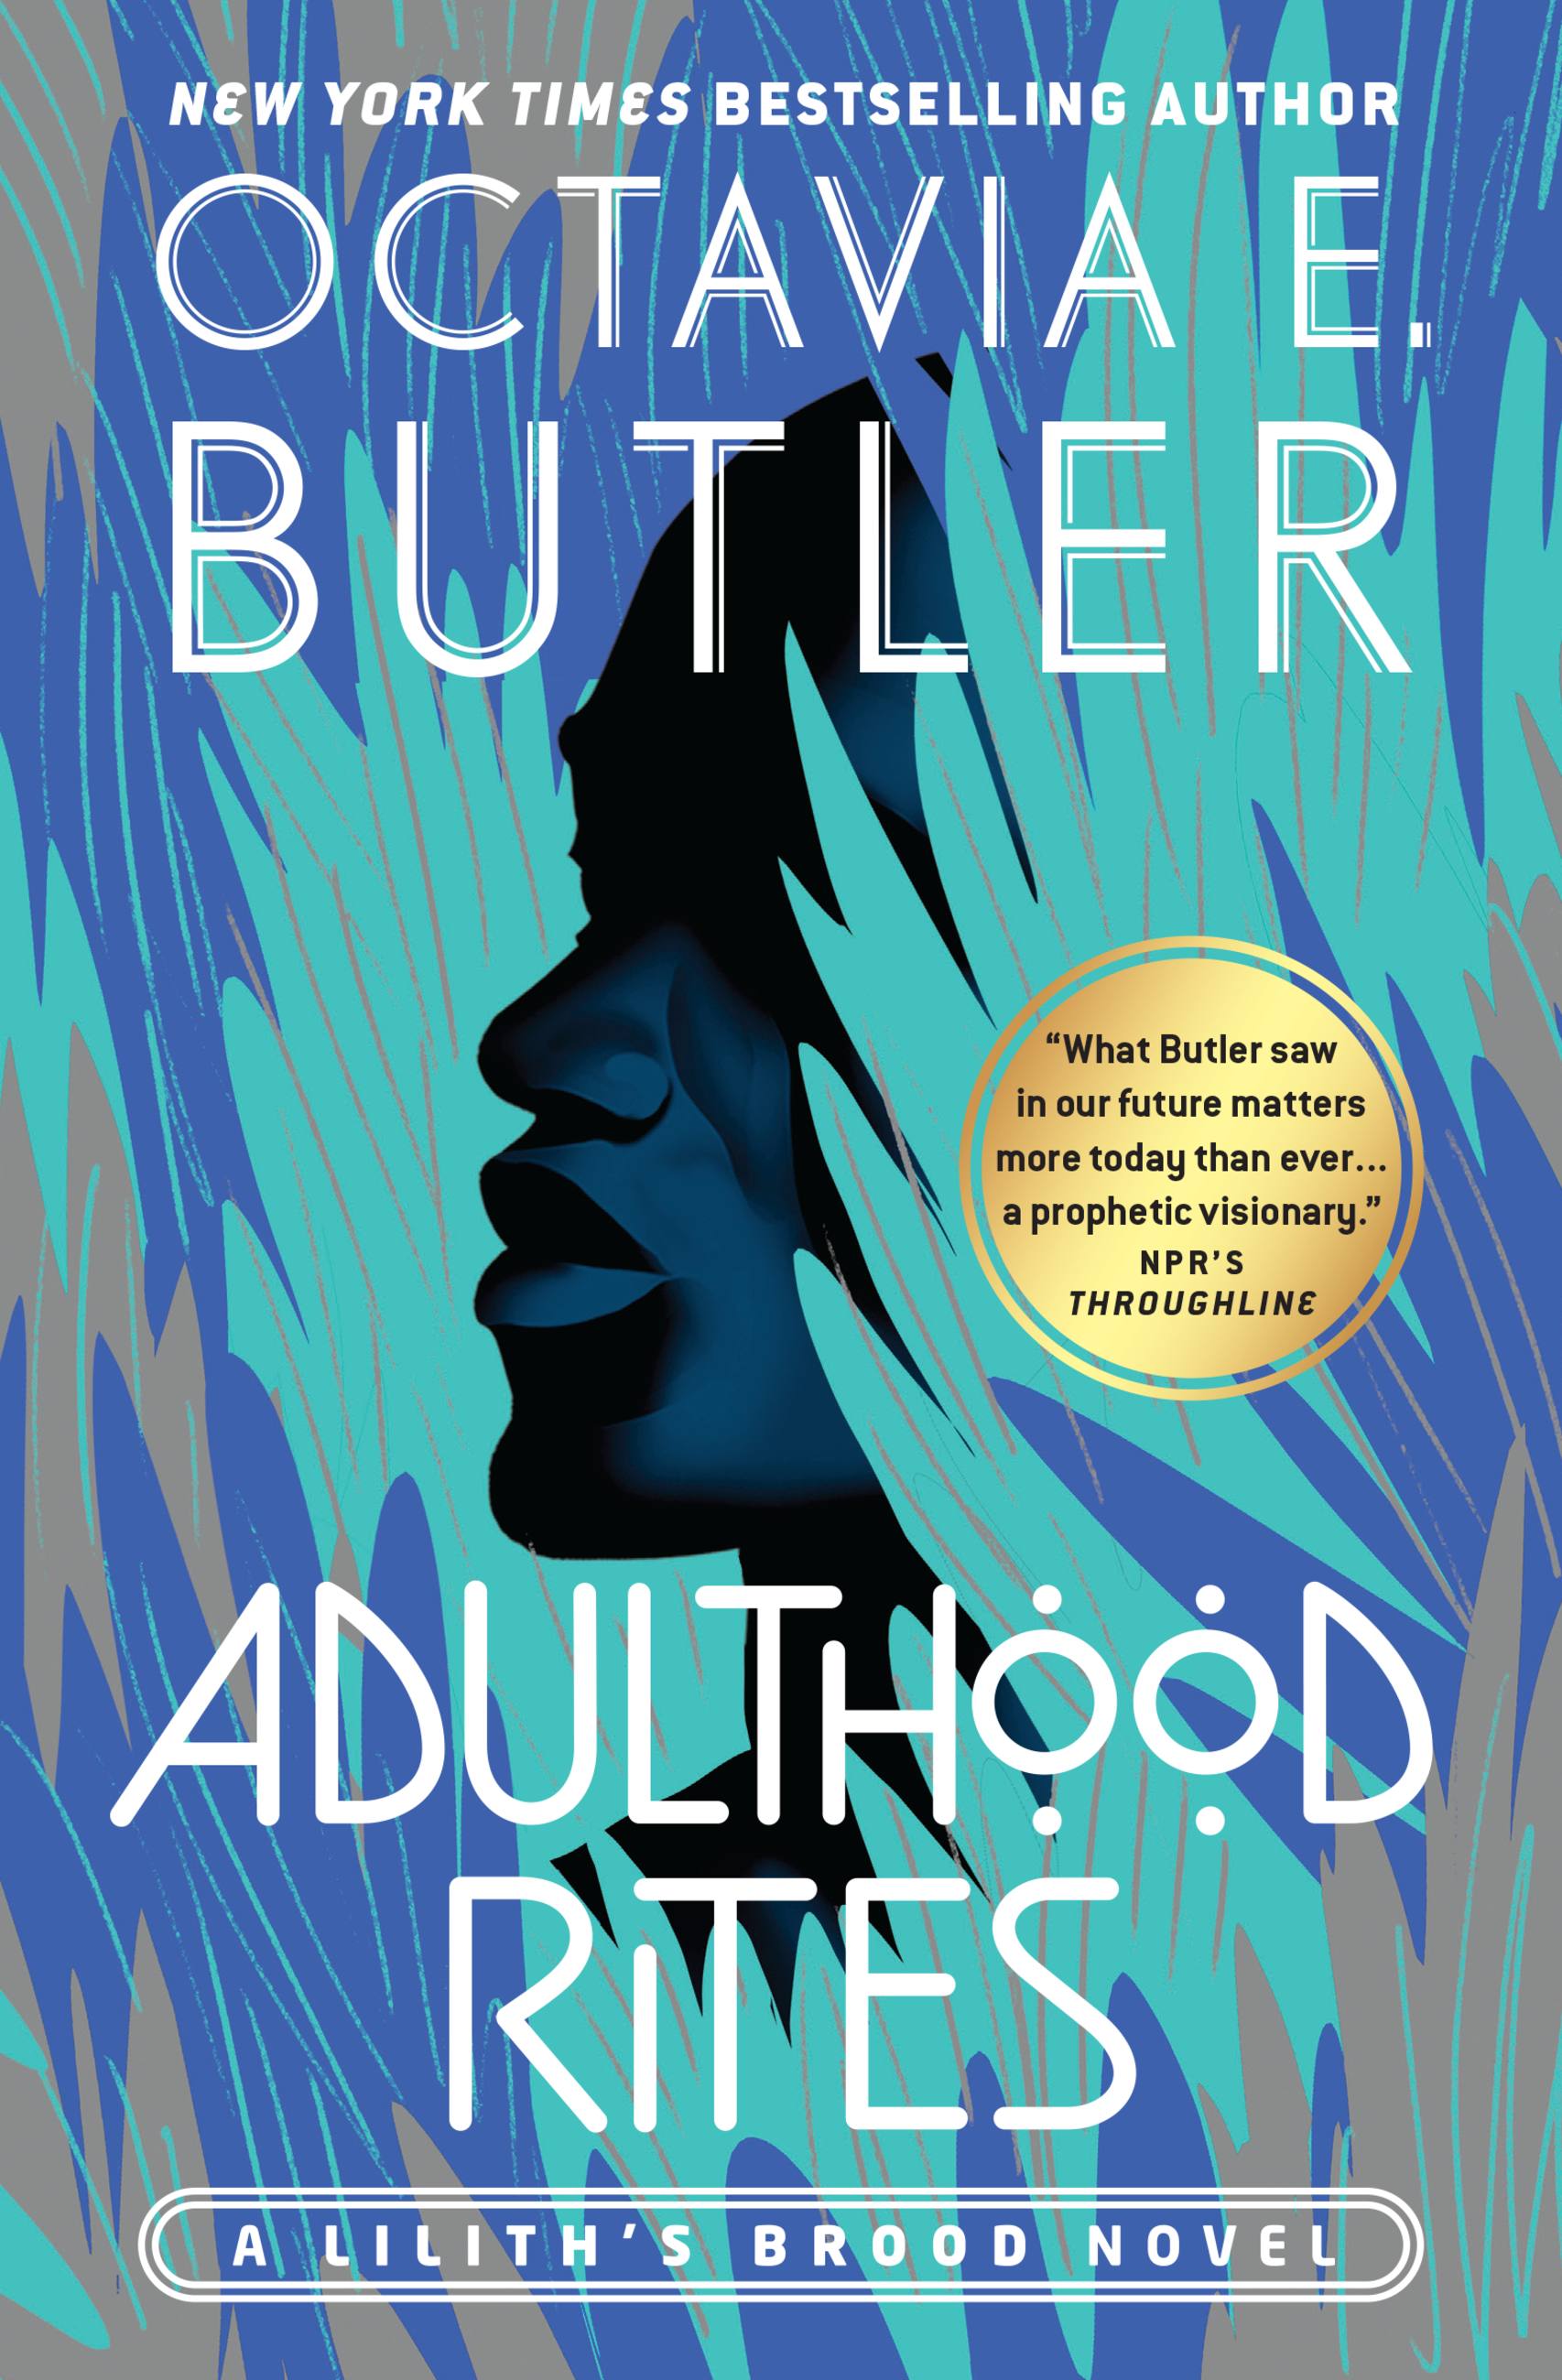 Octavia E. Butler: Adulthood Rites (1988, Orion Publishing Co)